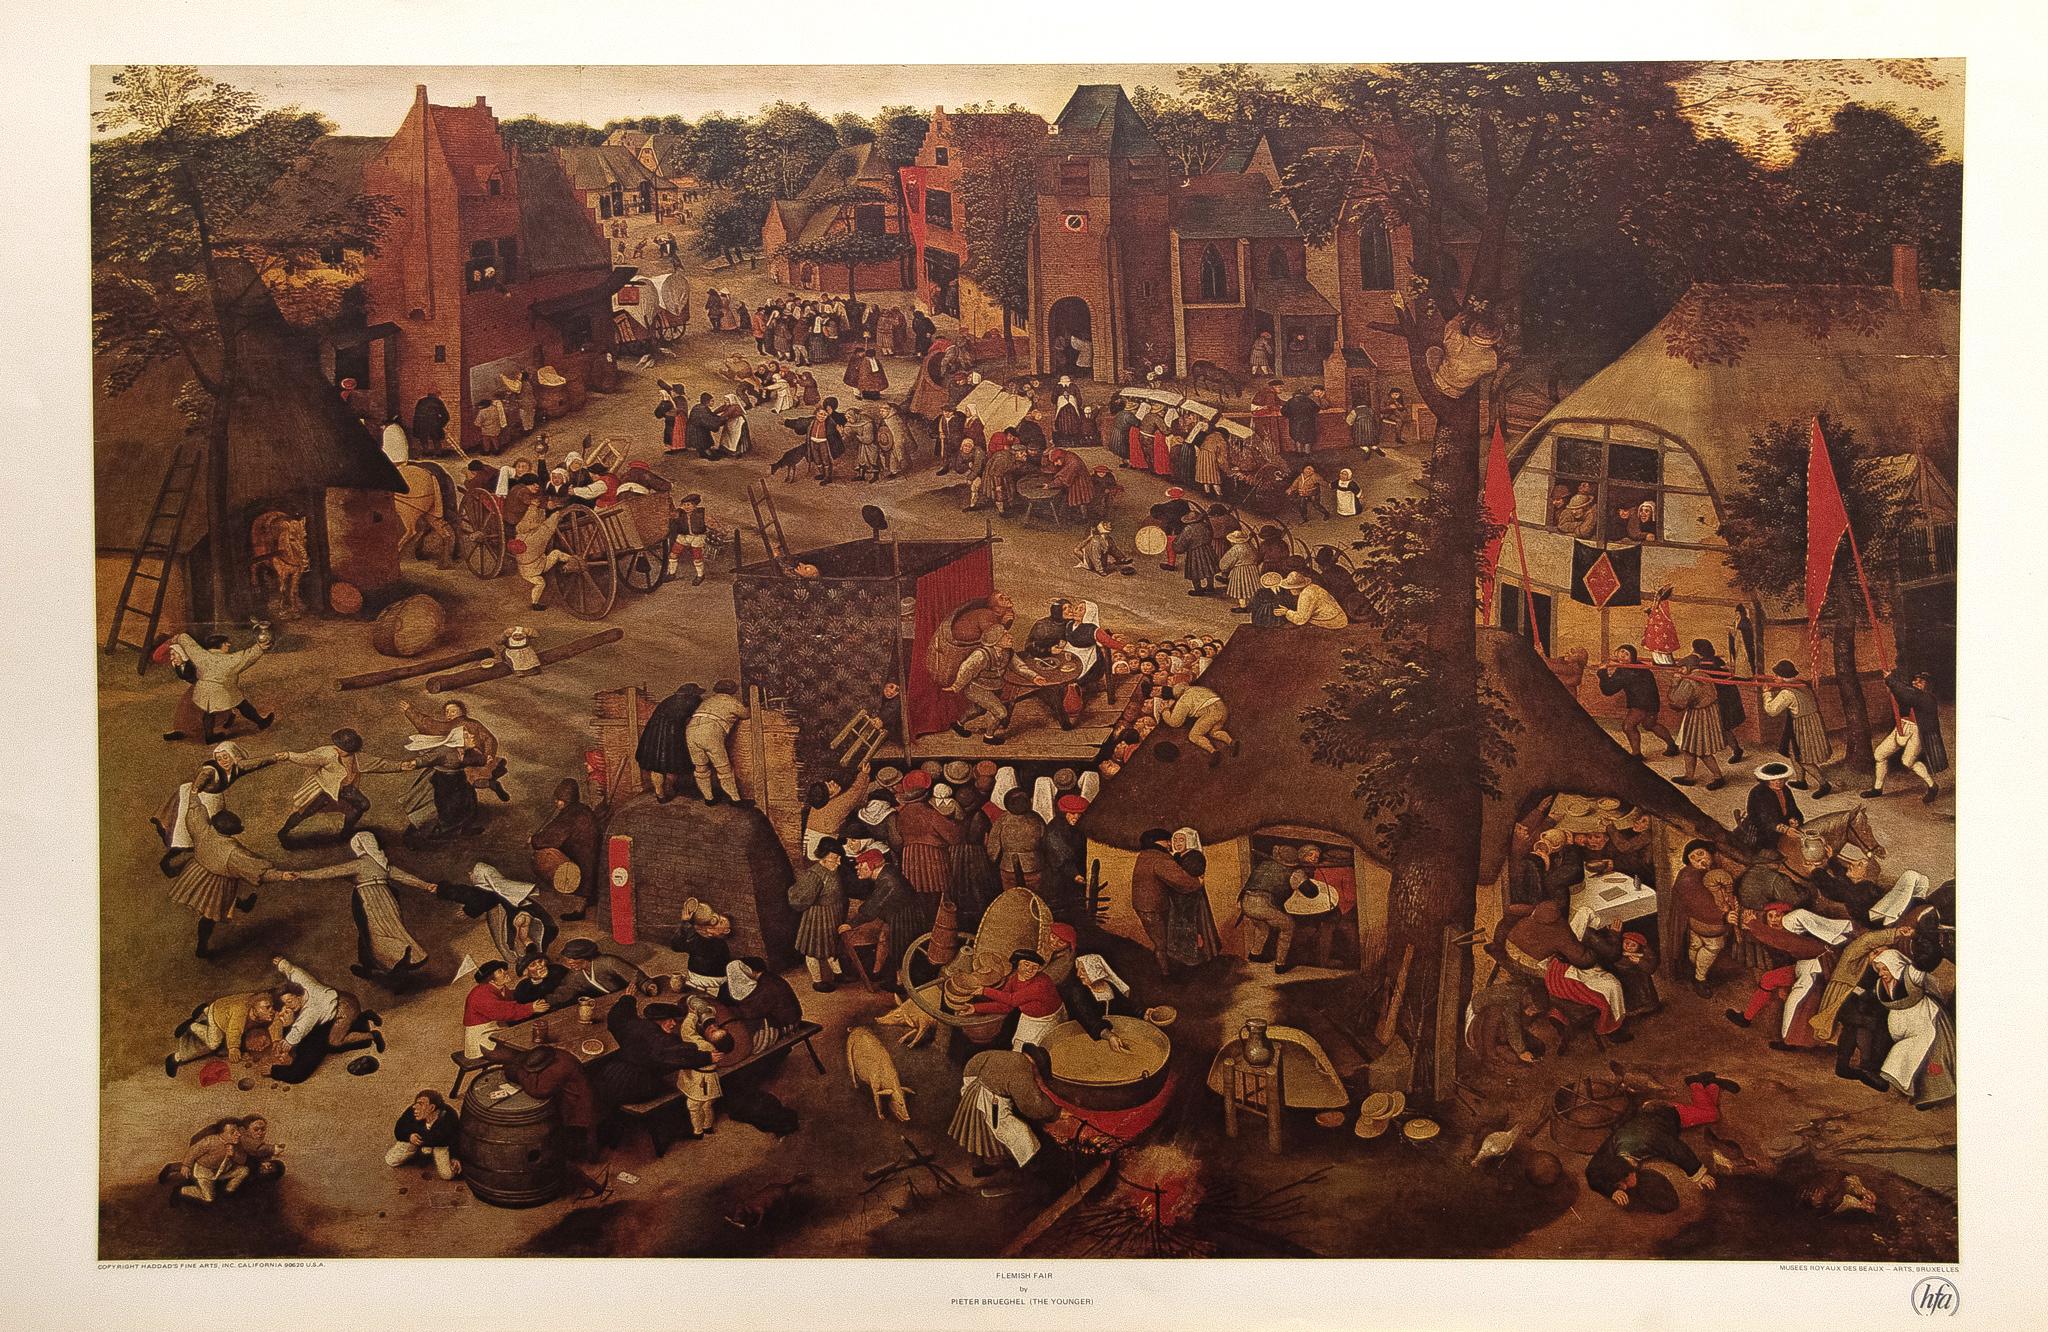 "Flemish Fair" by Jan Pieter Brueghel. Published by Haddad's Fine Arts. 